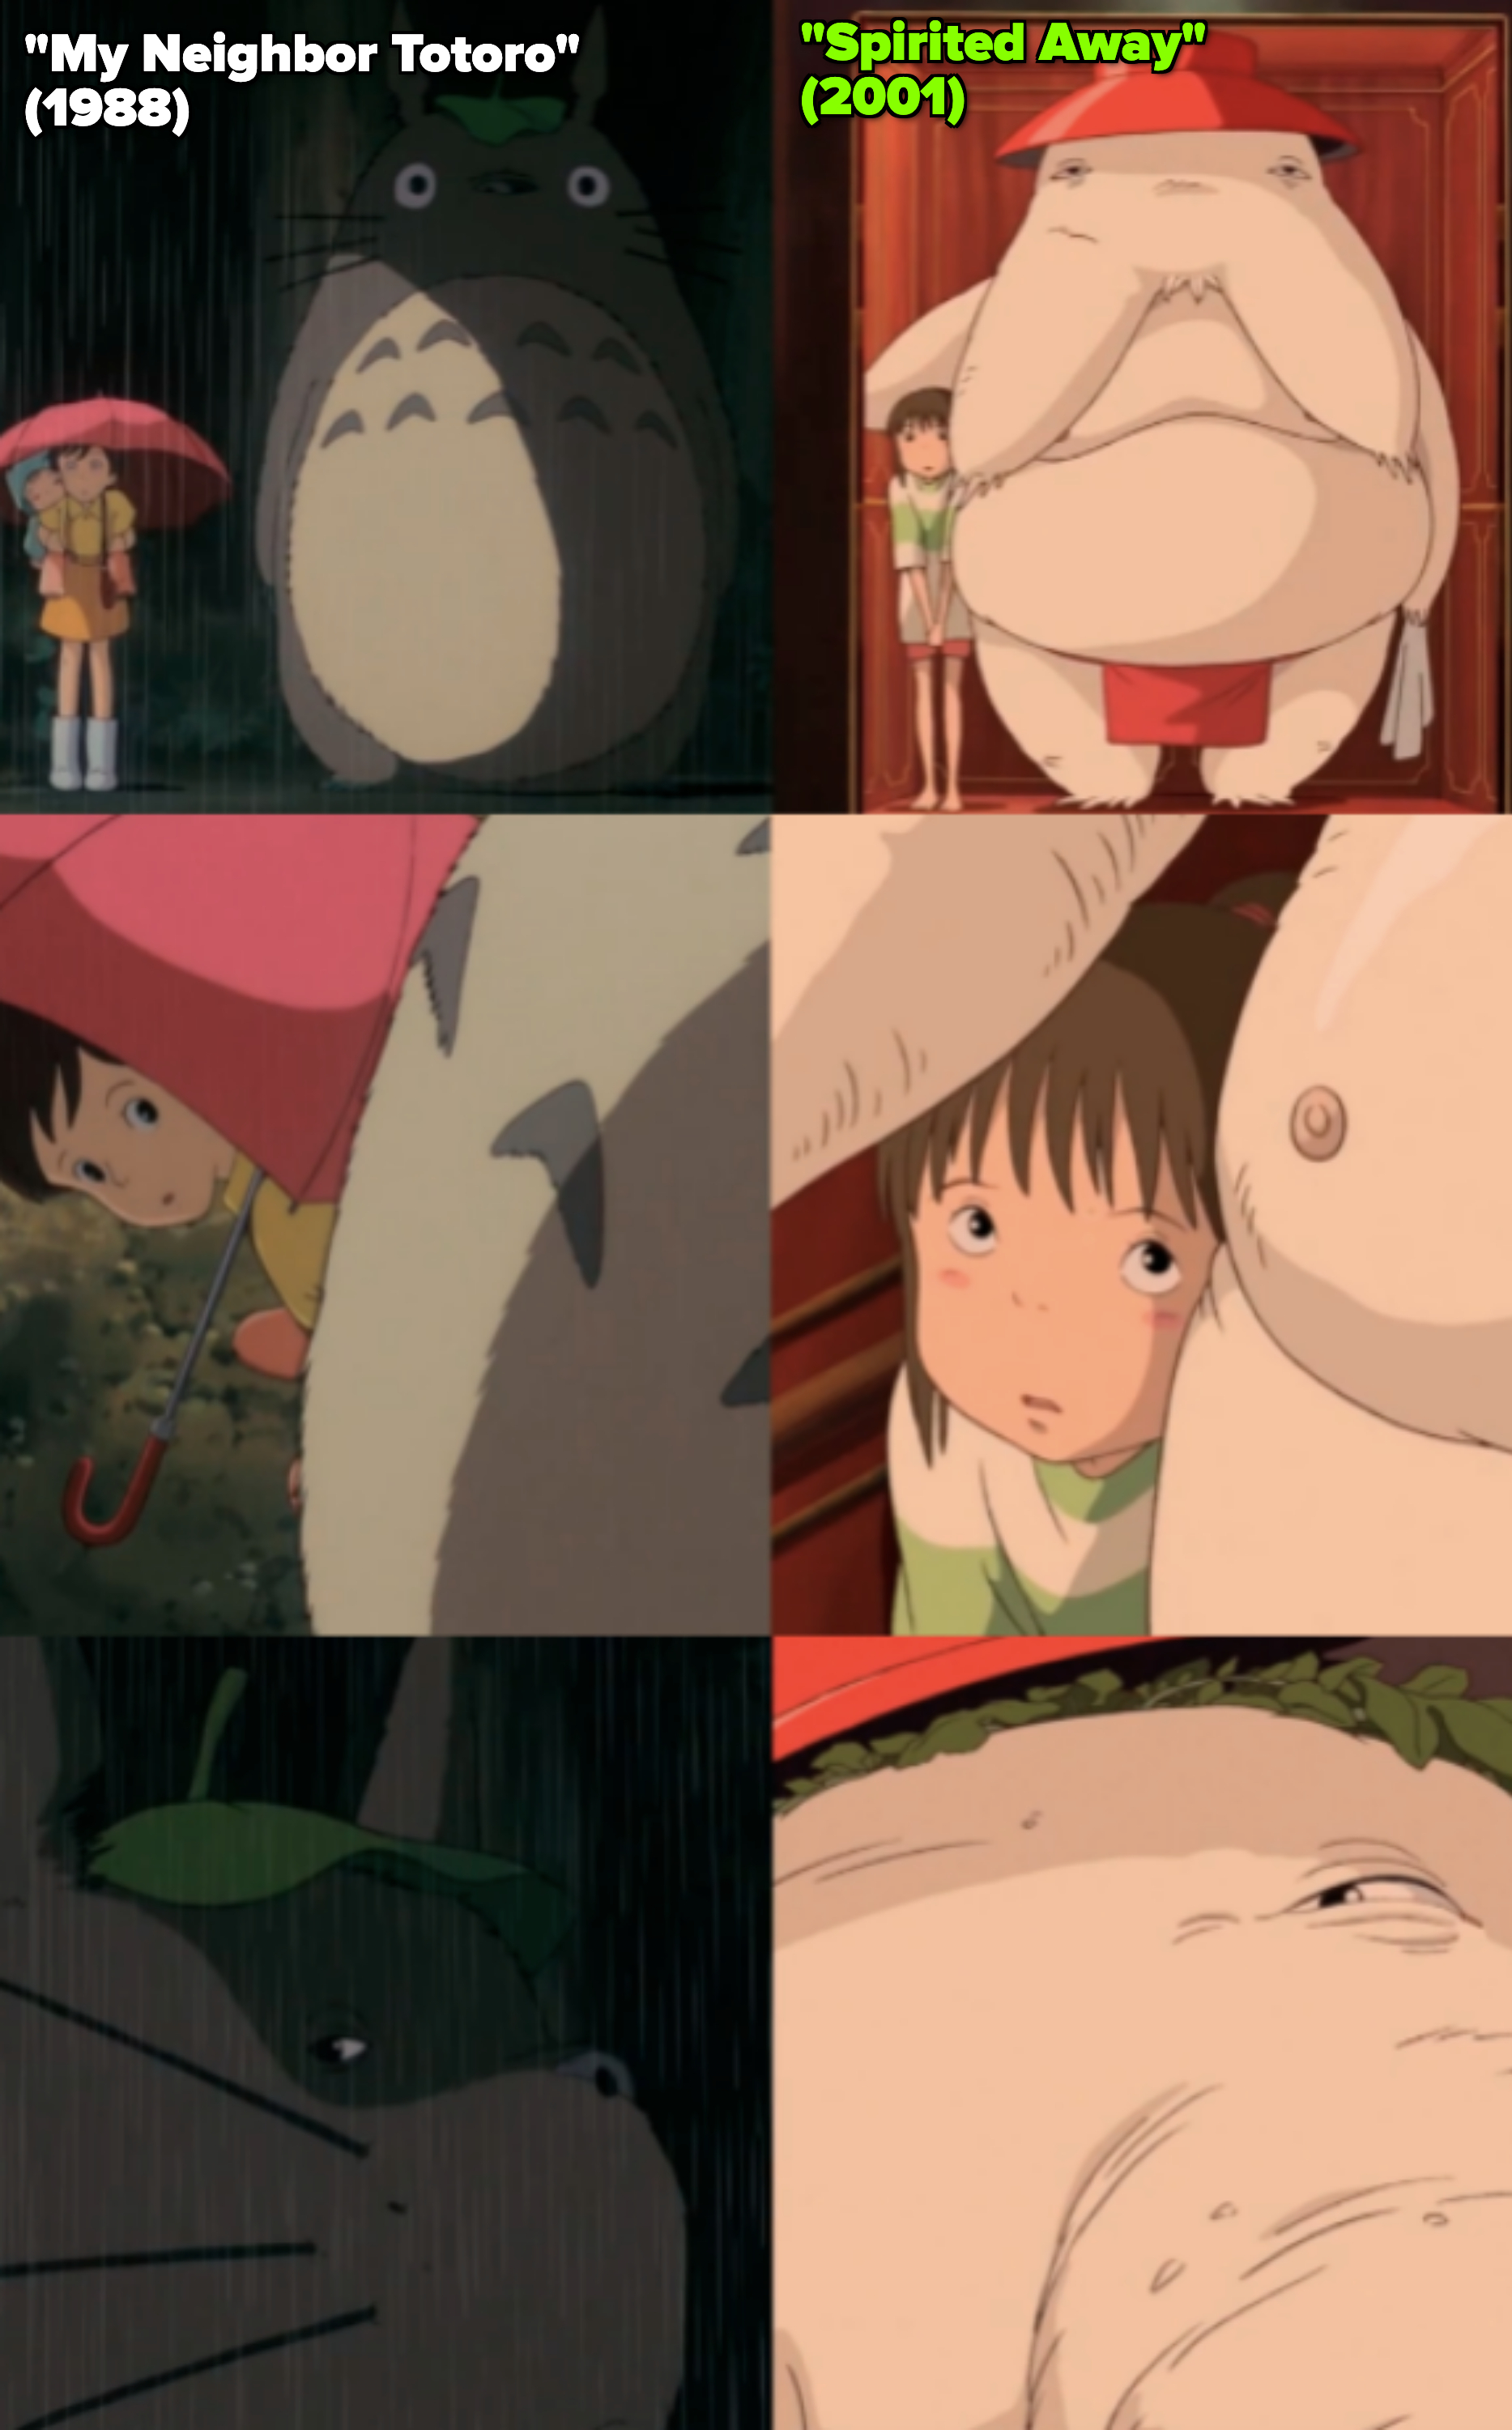 Satsuki from &quot;My Neighbor Totoro;&quot; Chihiro from &quot;Spirited Away&quot;